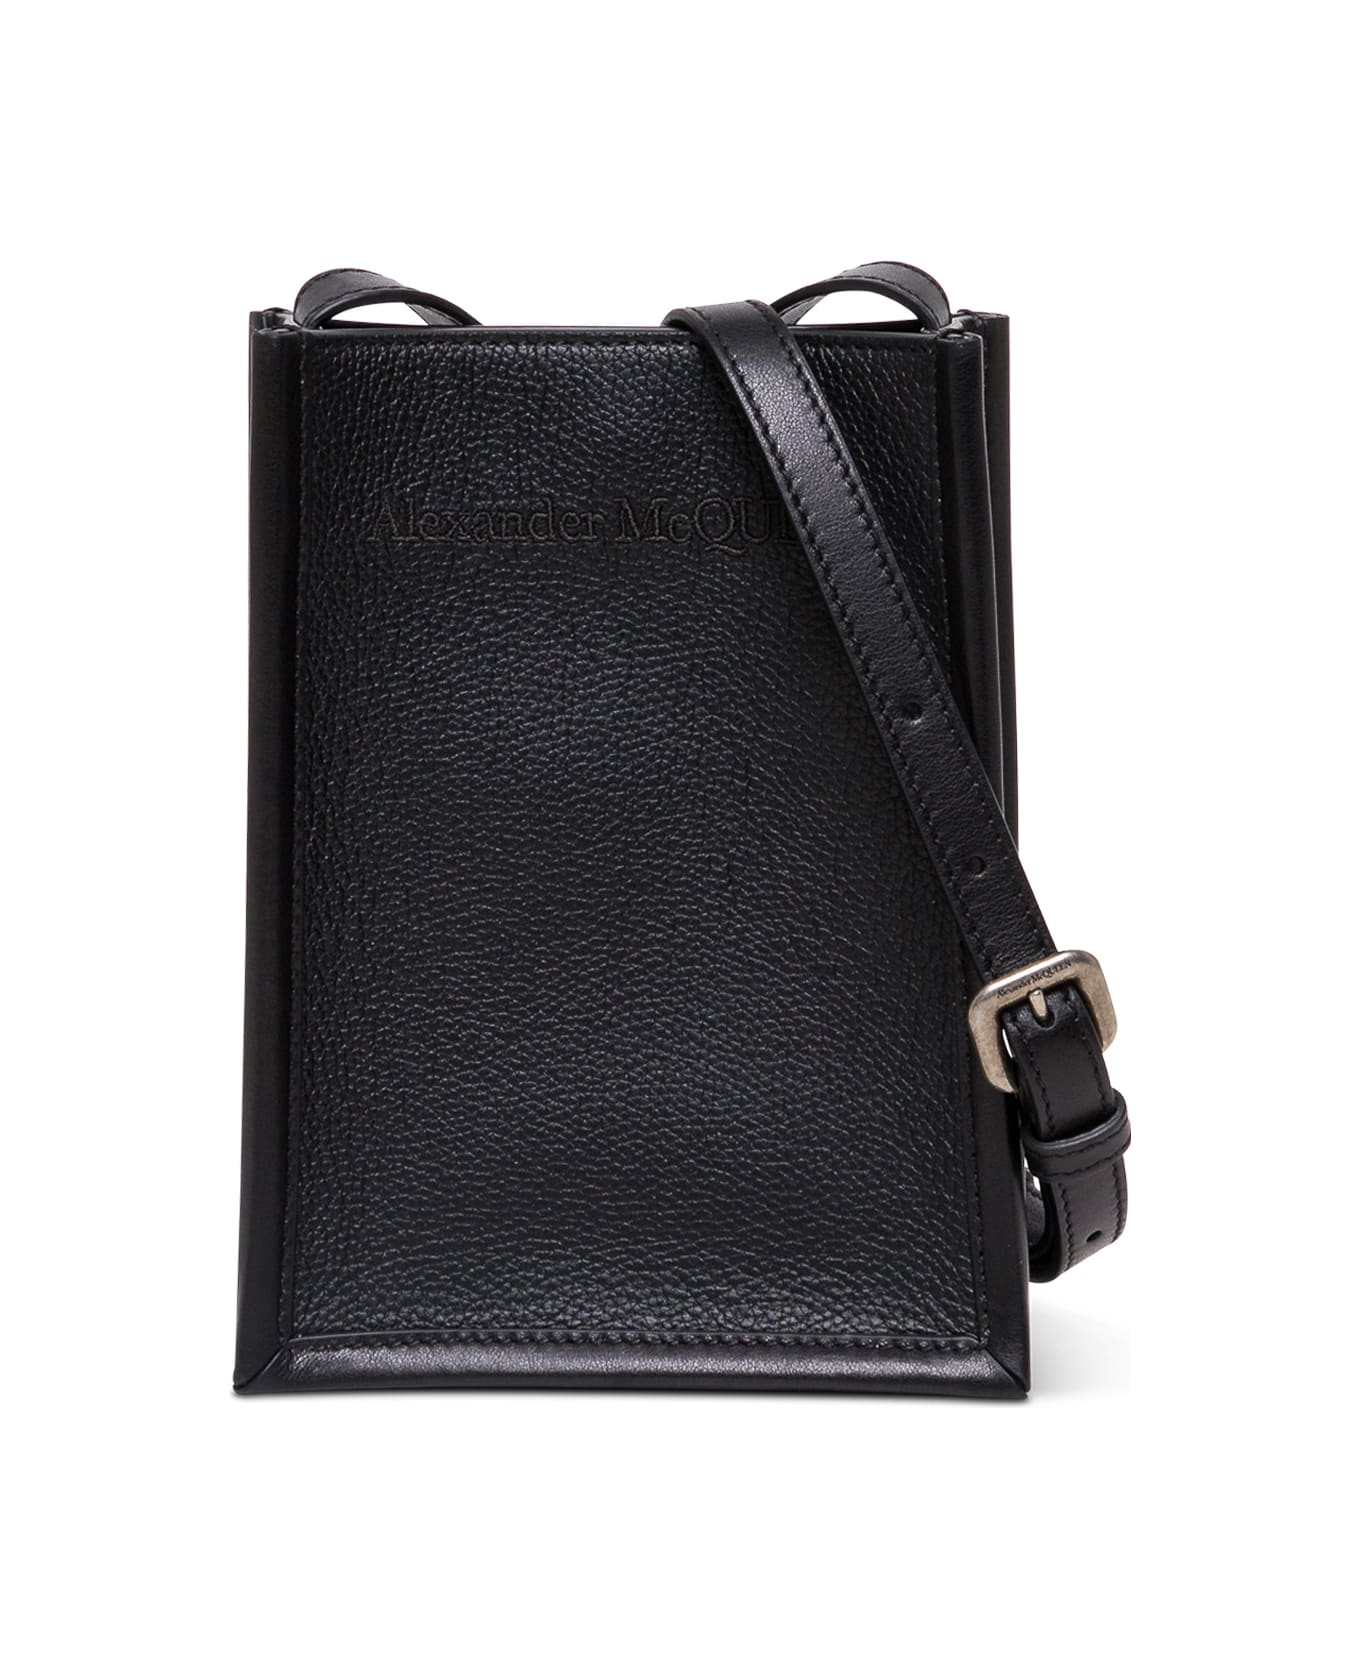 Alexander McQueen Black Leather Crossbody Bag With Logo - Black